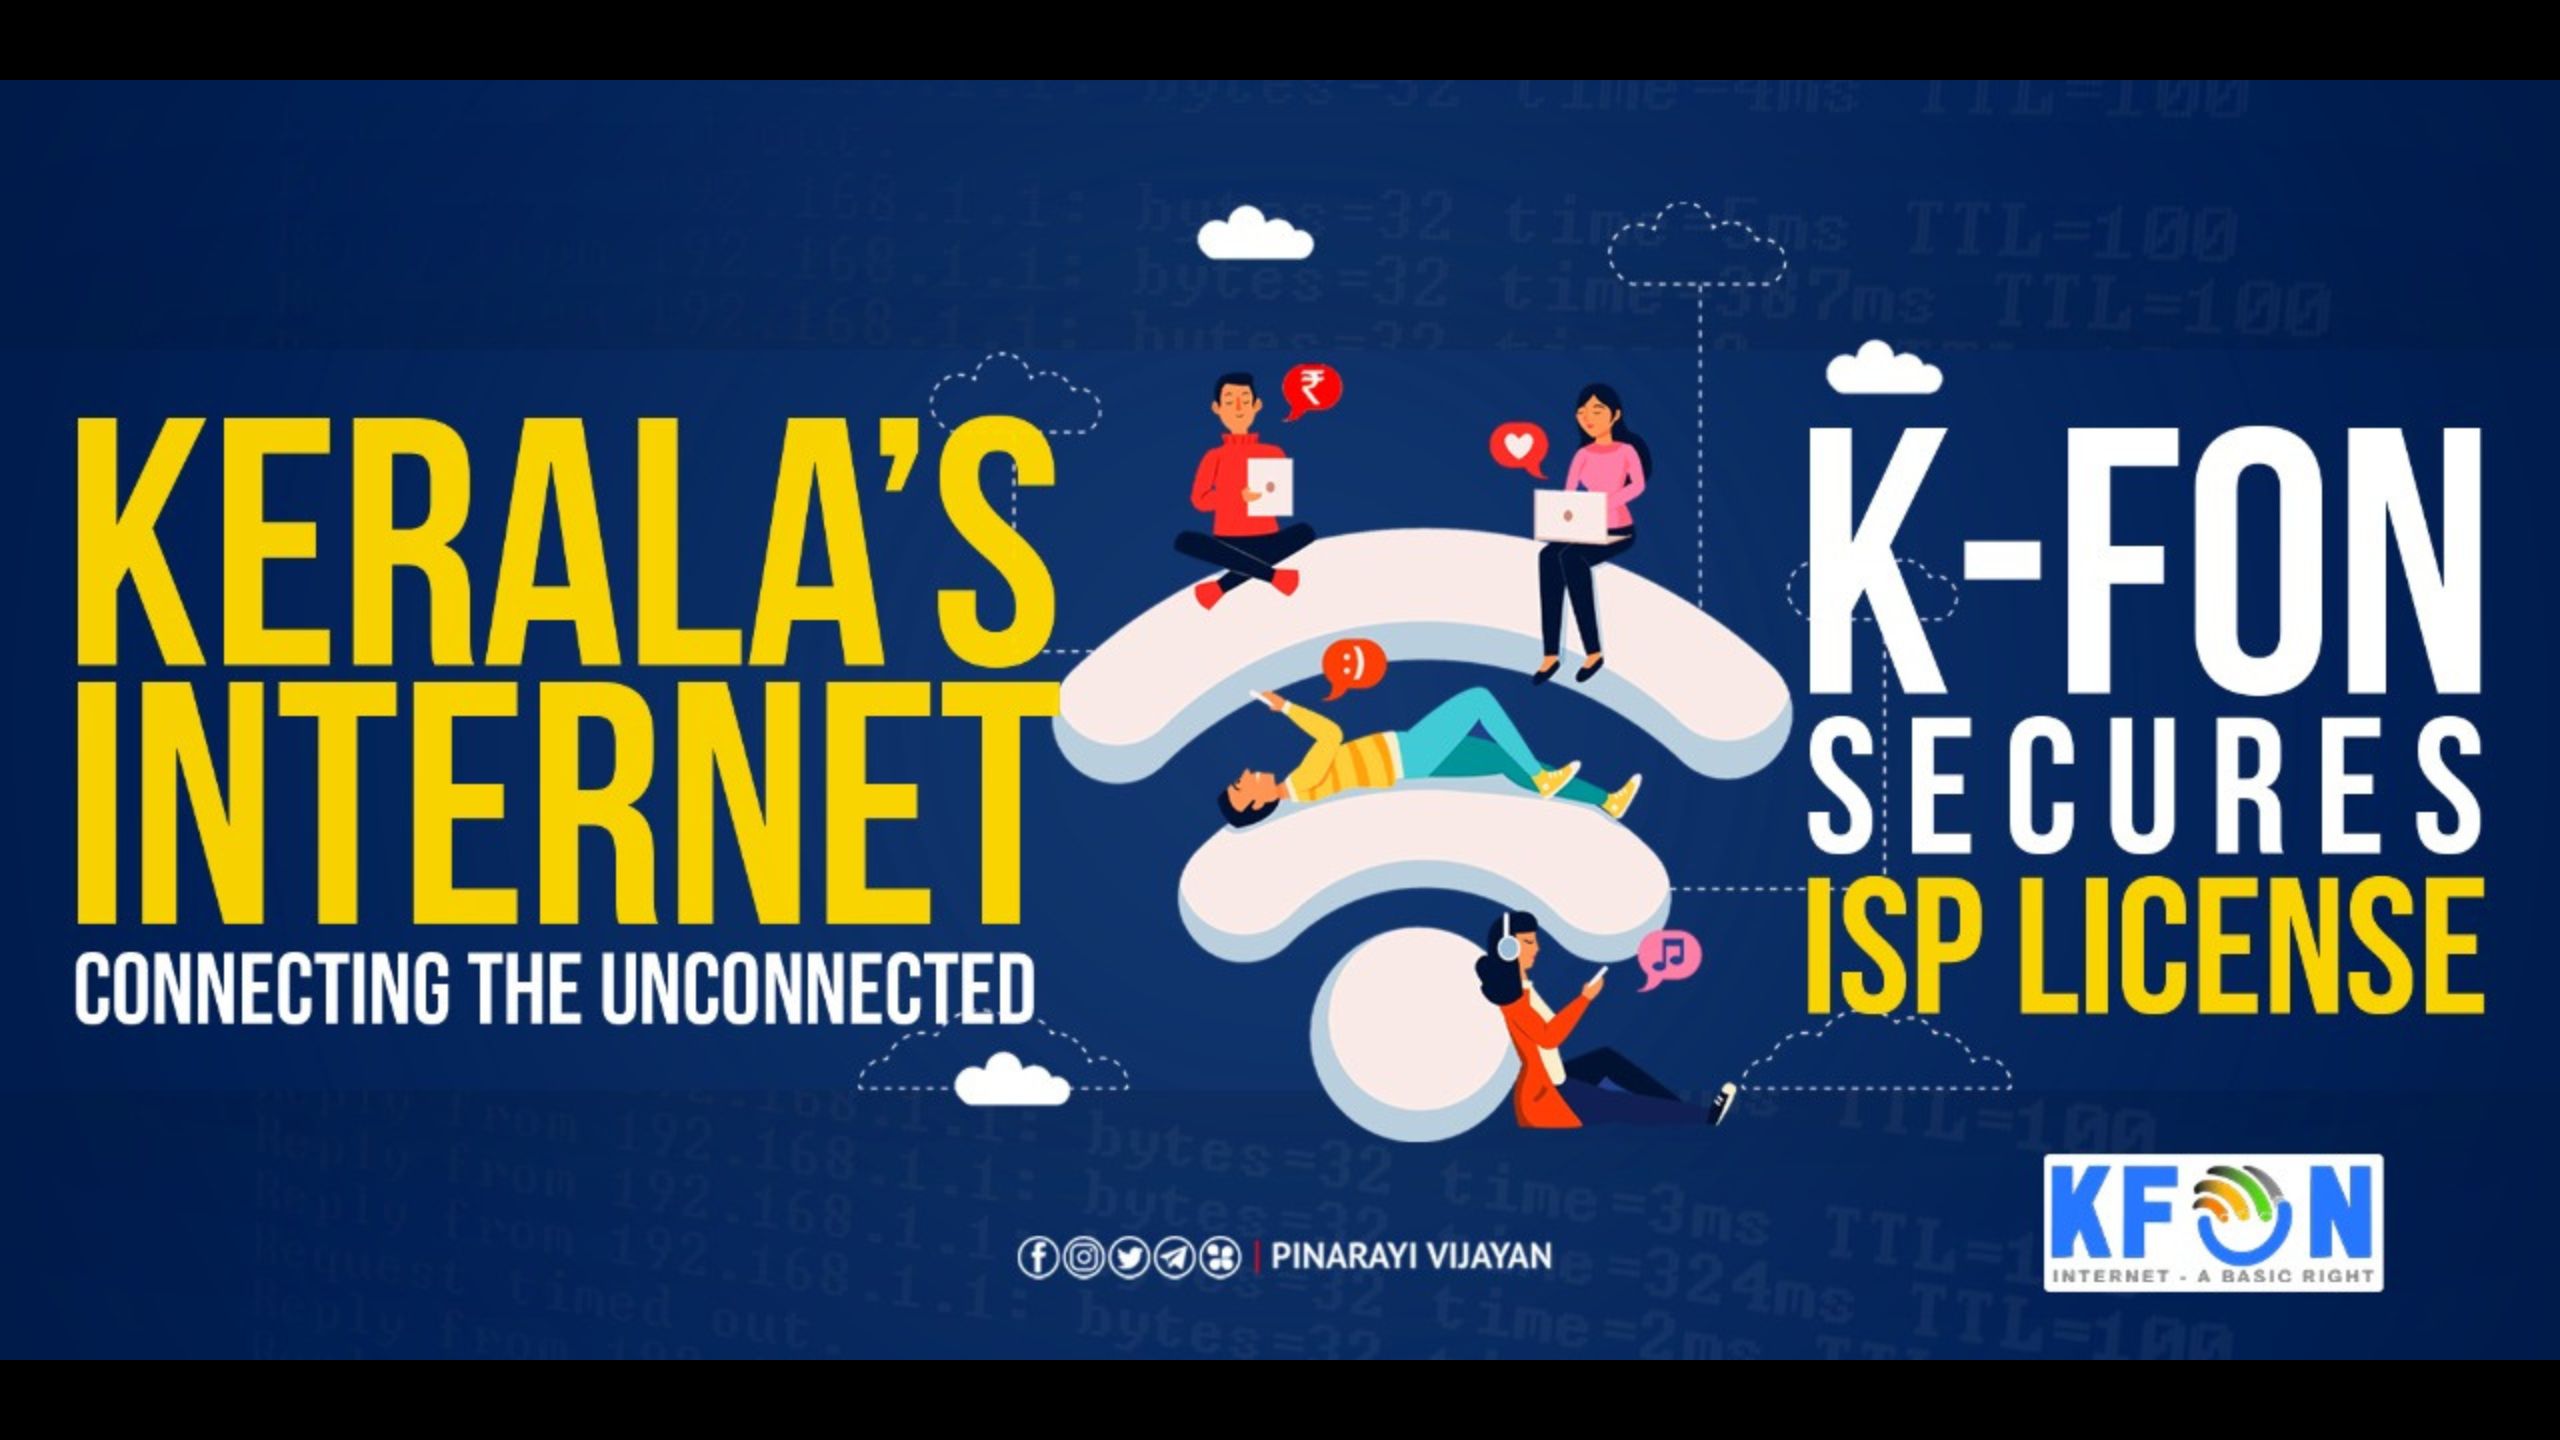 kerala's kfon secures isp license | newsclick